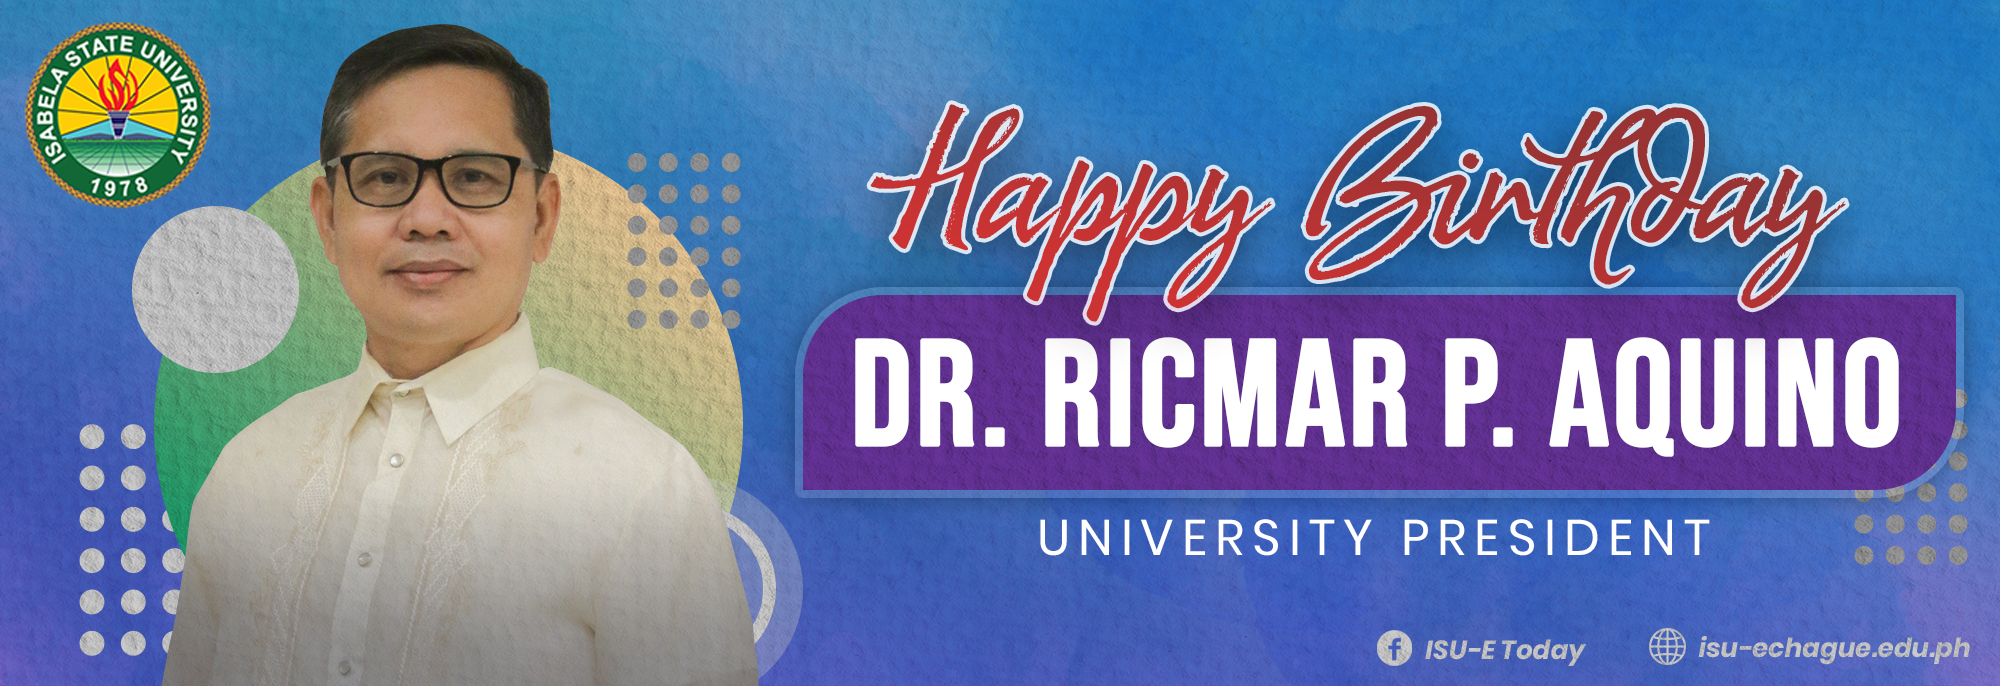 Happy Birthday Dr. Ricmar P. Aquino, University President